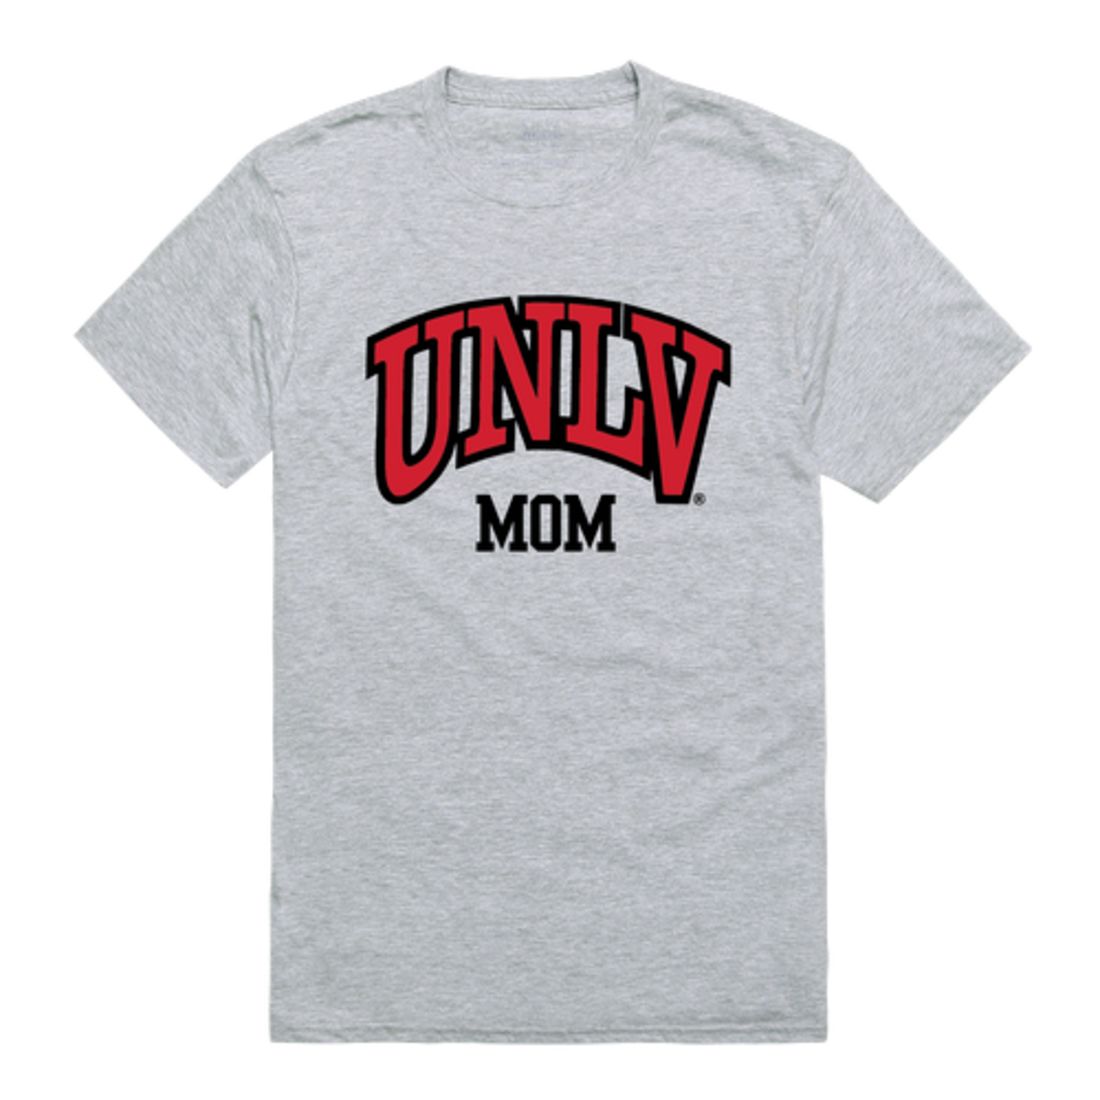 UNLV University of Nevada Las Vegas Rebels College Mom Womens T-Shirt Heather Grey Small - image 1 of 2